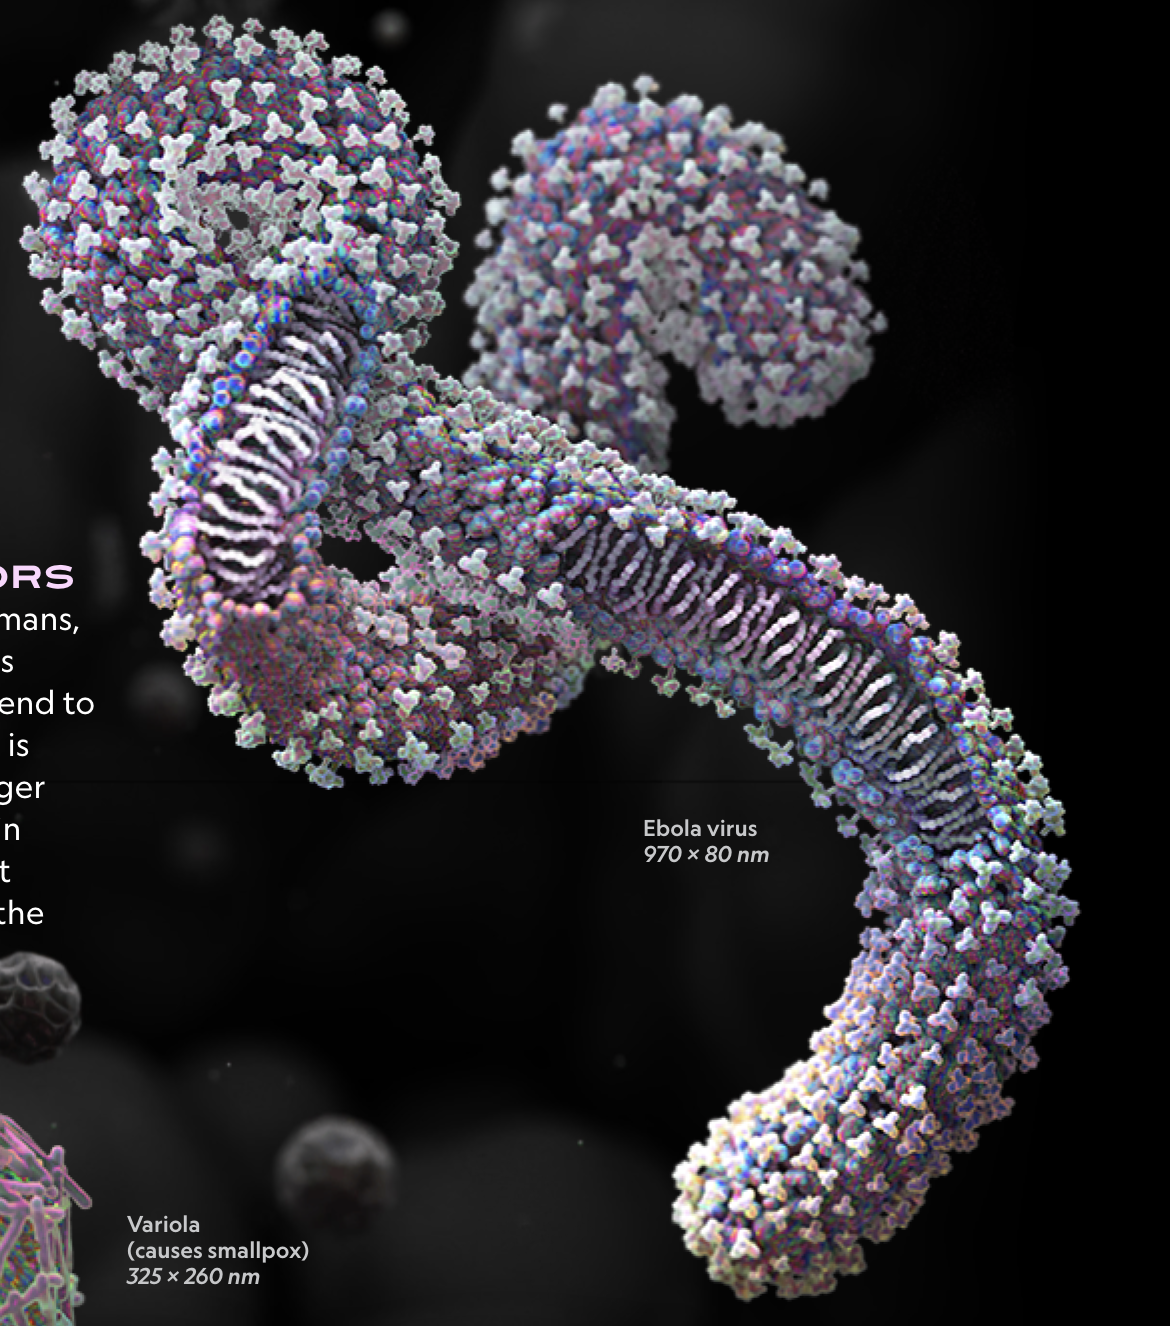 Ebola Virus Image.png